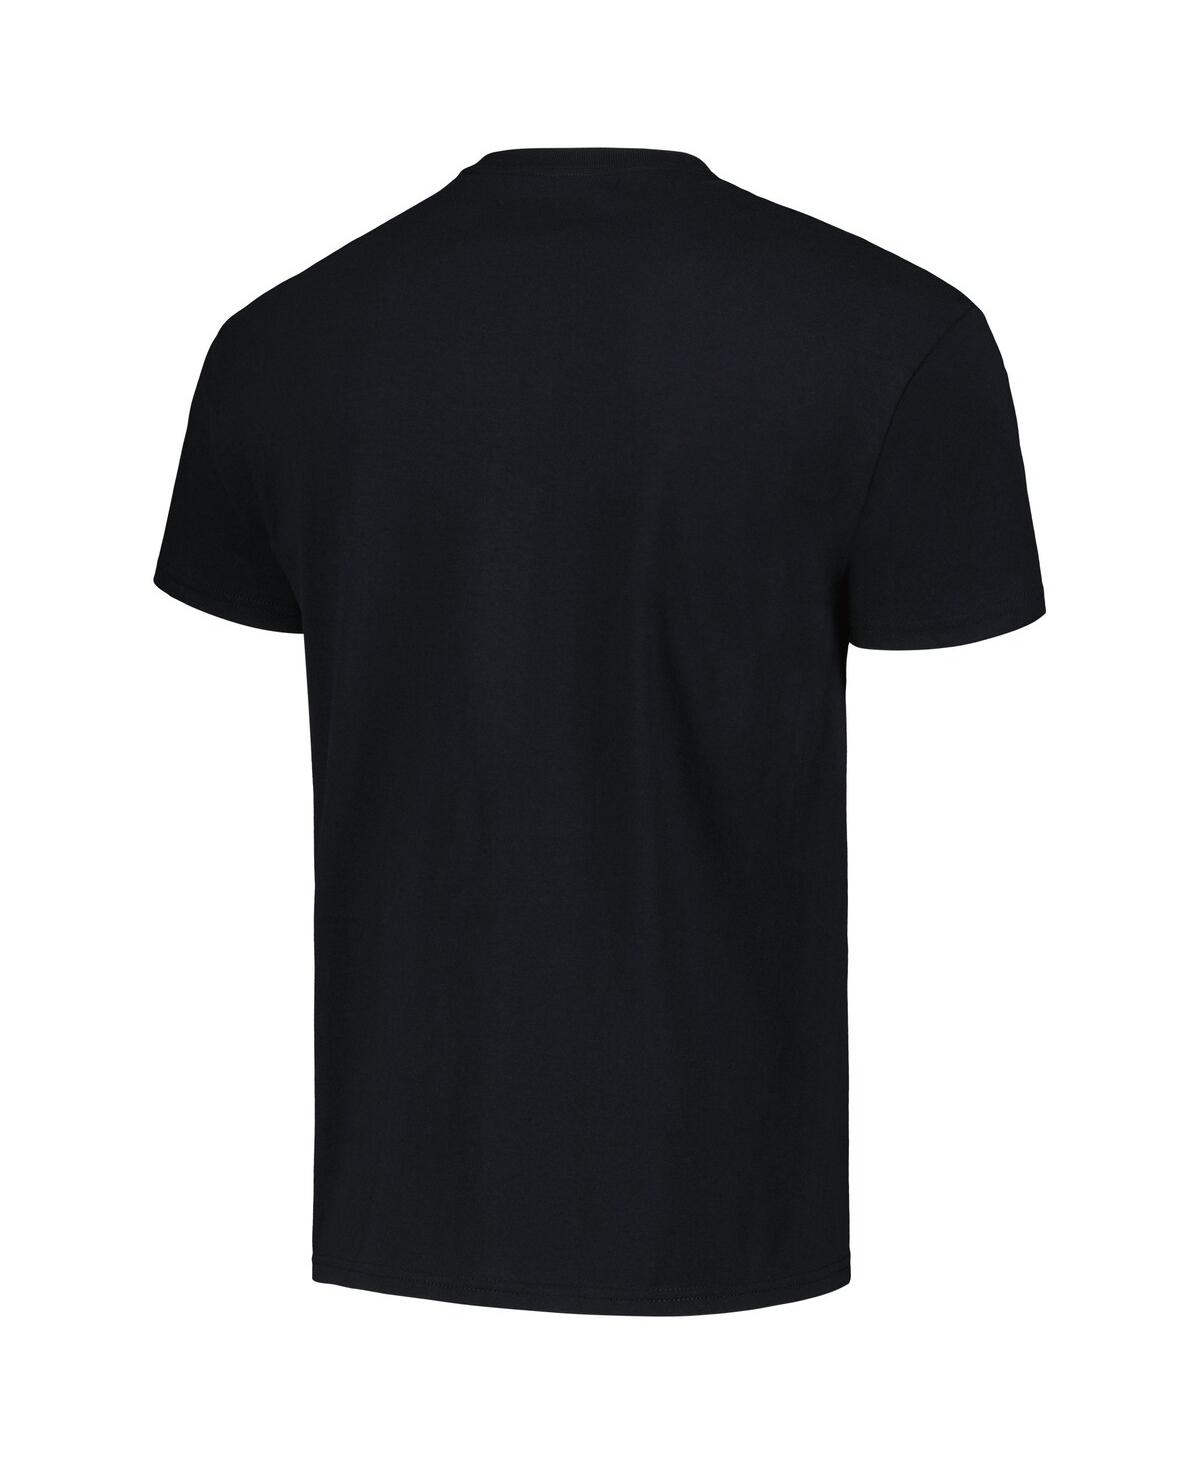 Shop Bravado Men's And Women's Black Pantera Vulgar Display Of Power T-shirt